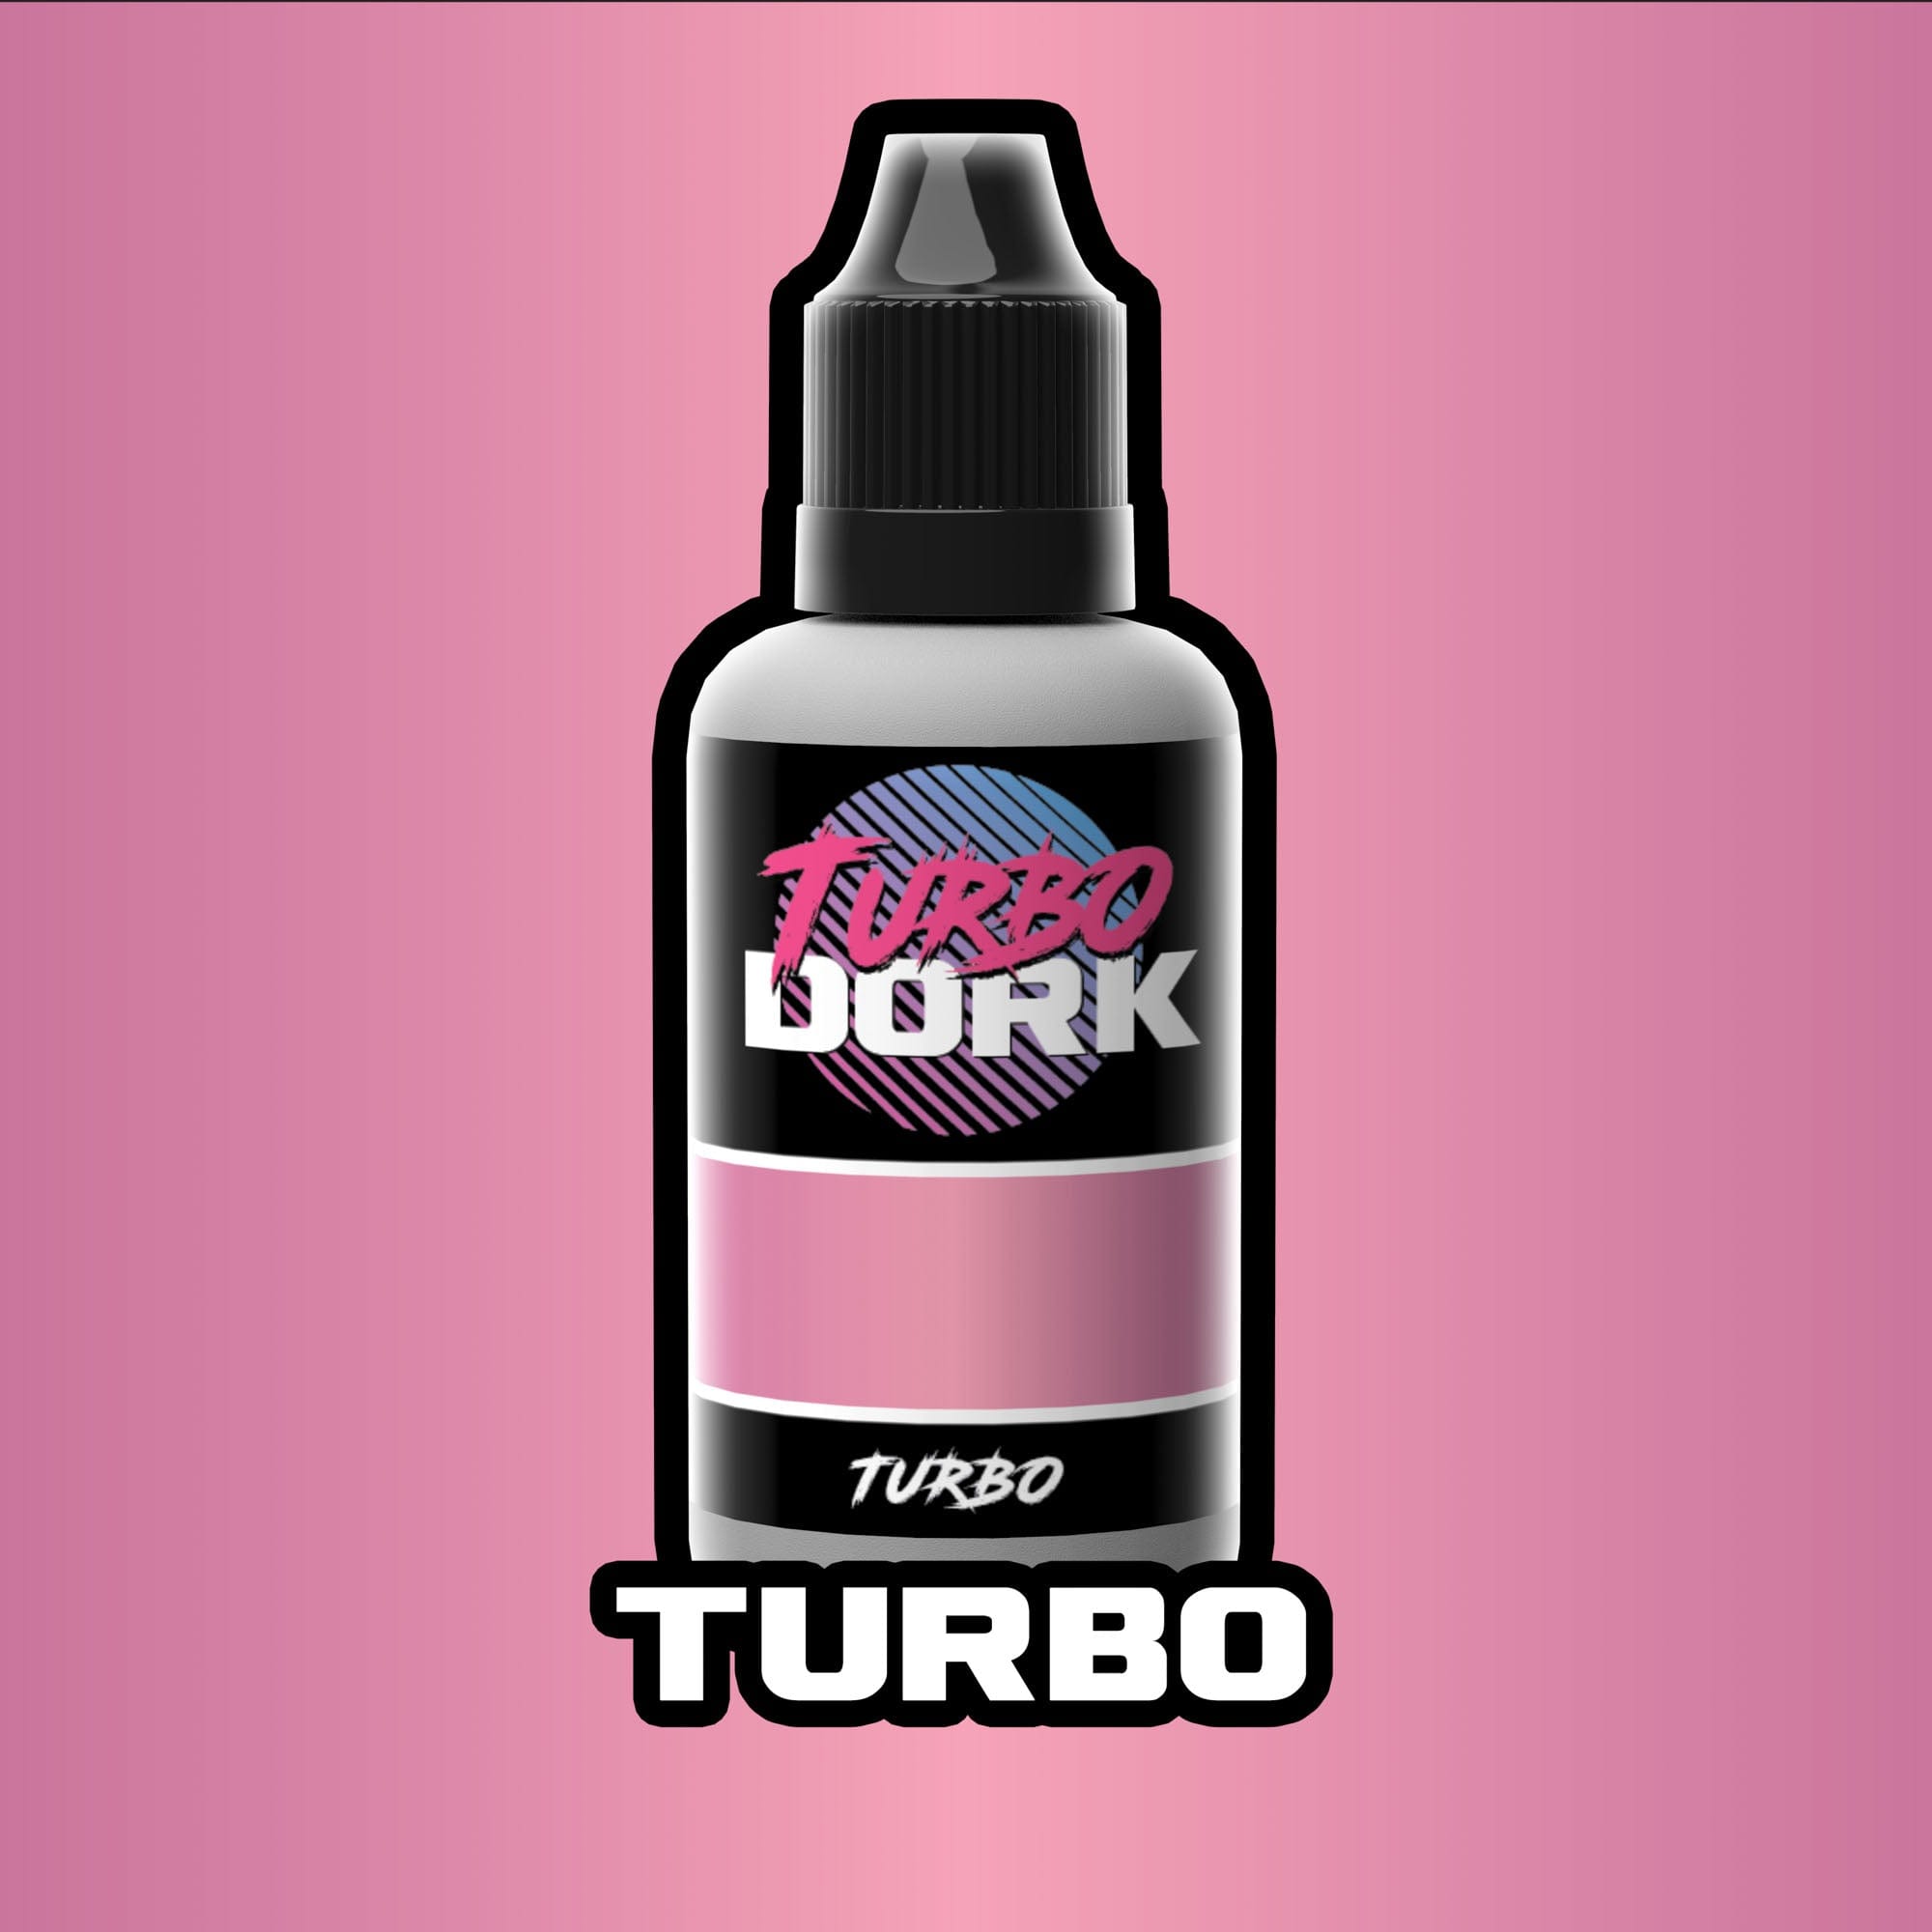 Turbo Metallic Acrylic Paint Metallic Turbo Dork Exit 23 Games Turbo Metallic Acrylic Paint